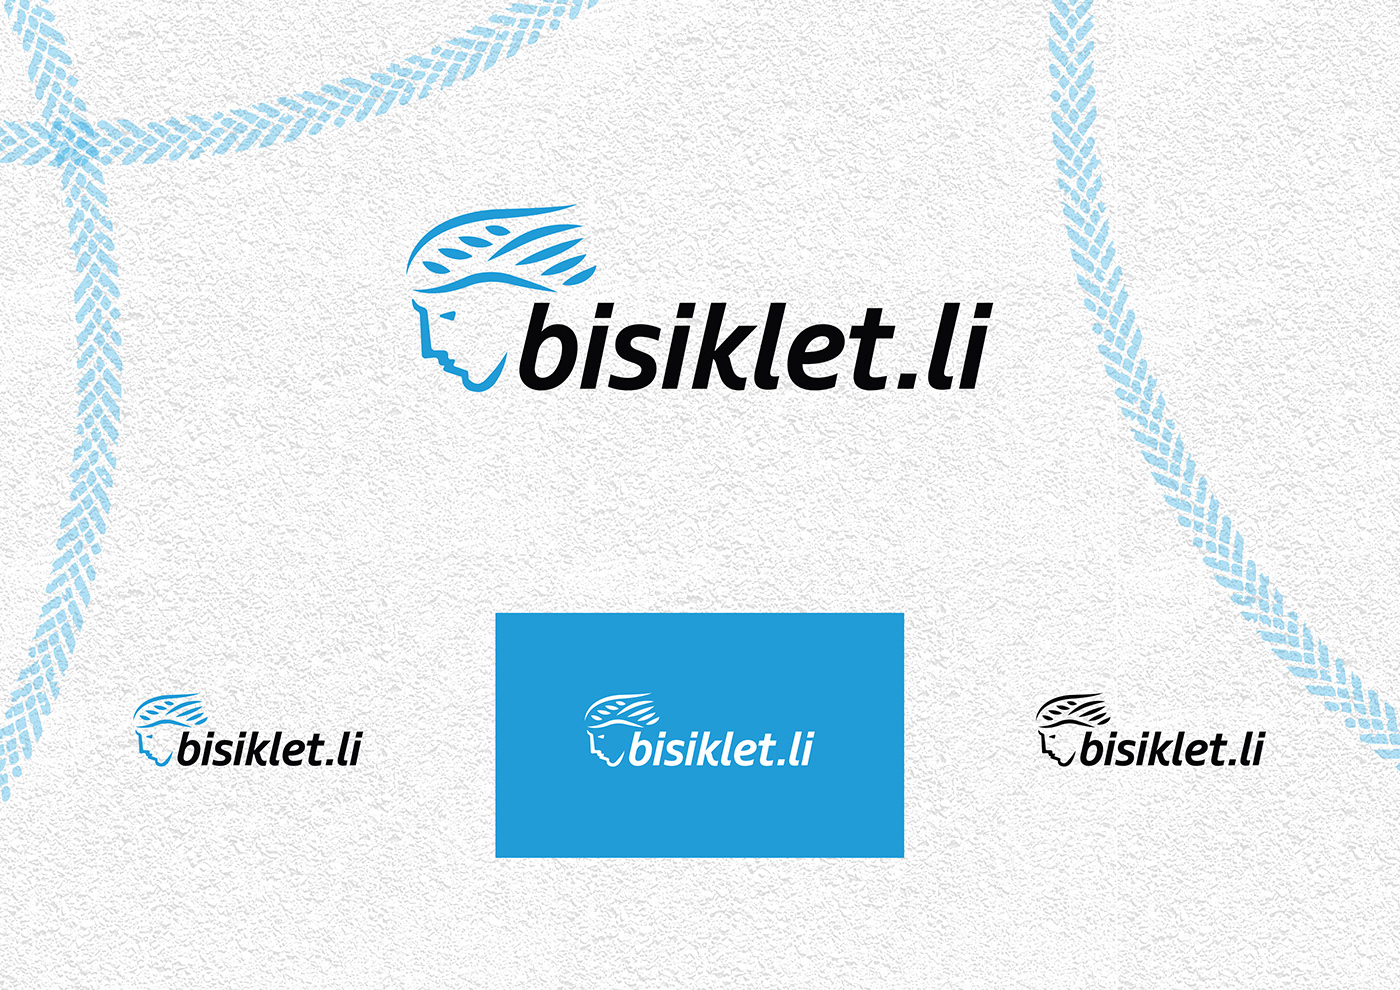 bisiklet.li logo Corporate Identity brand naming